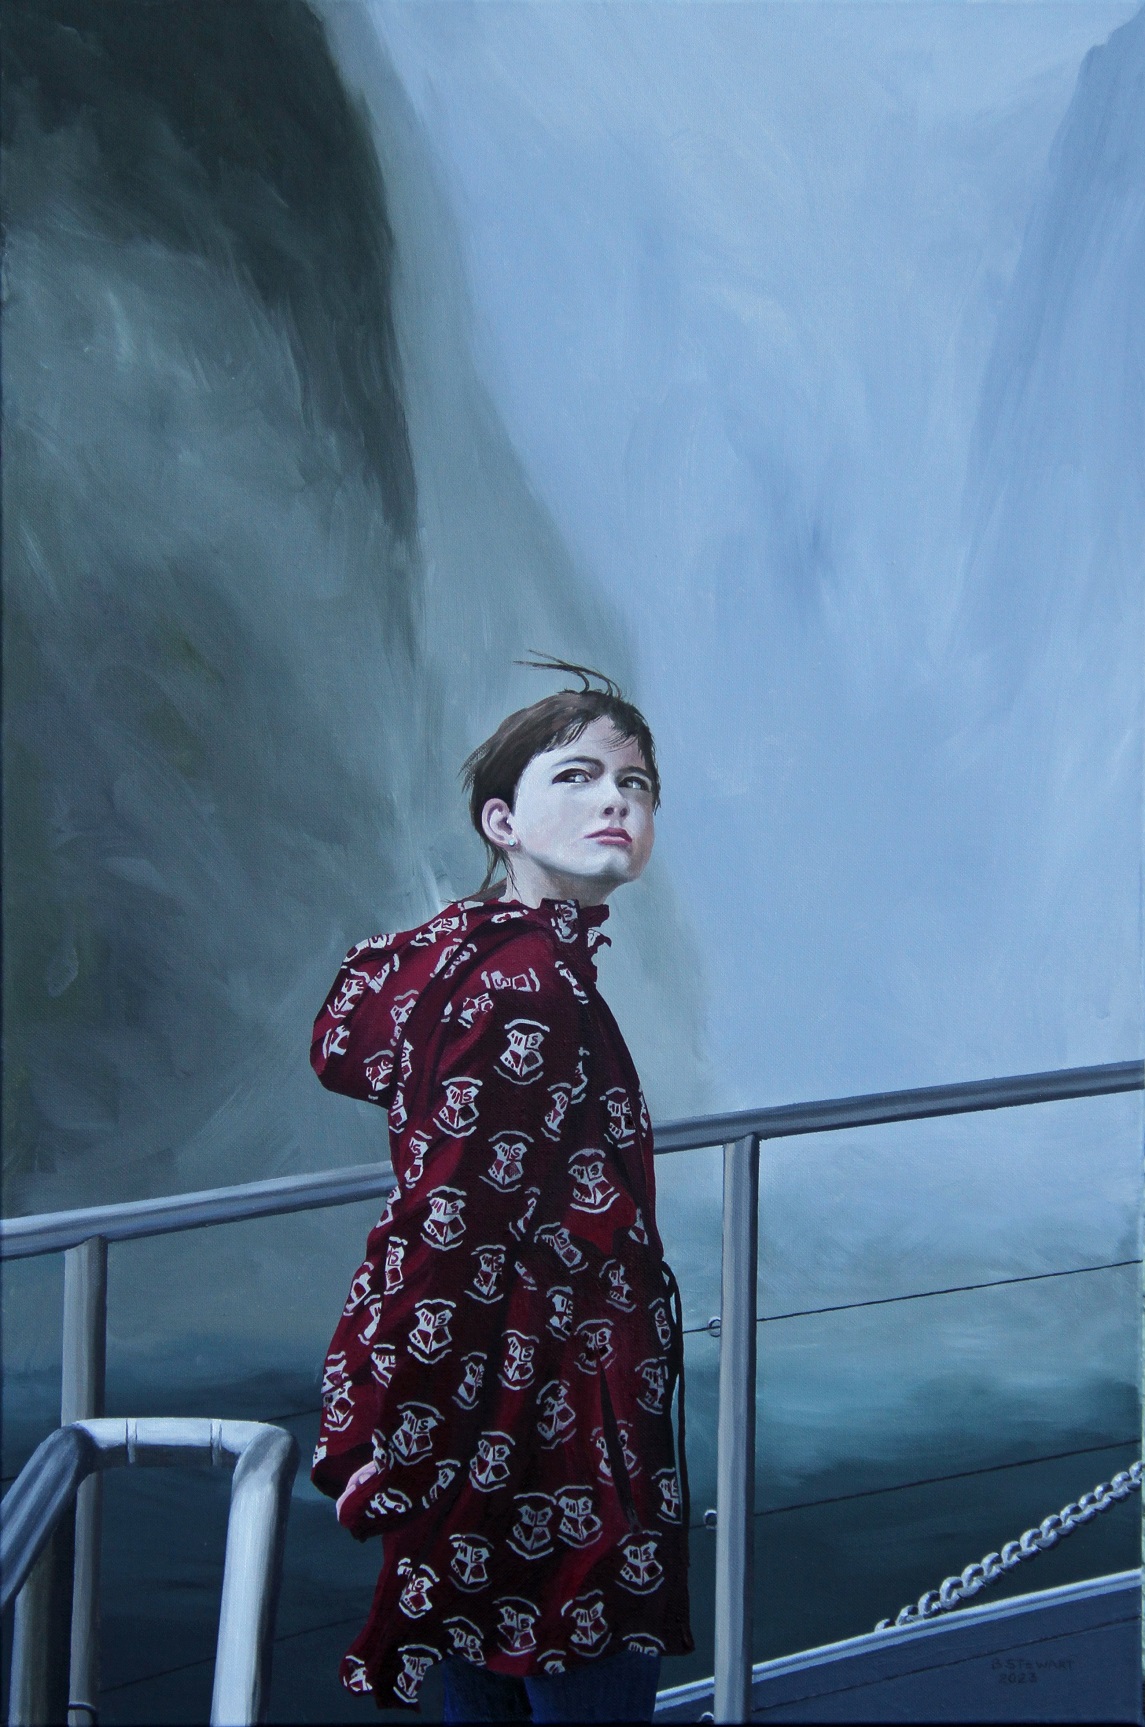 Maid of the Mist, by Brian Stewart, of Dunedin.